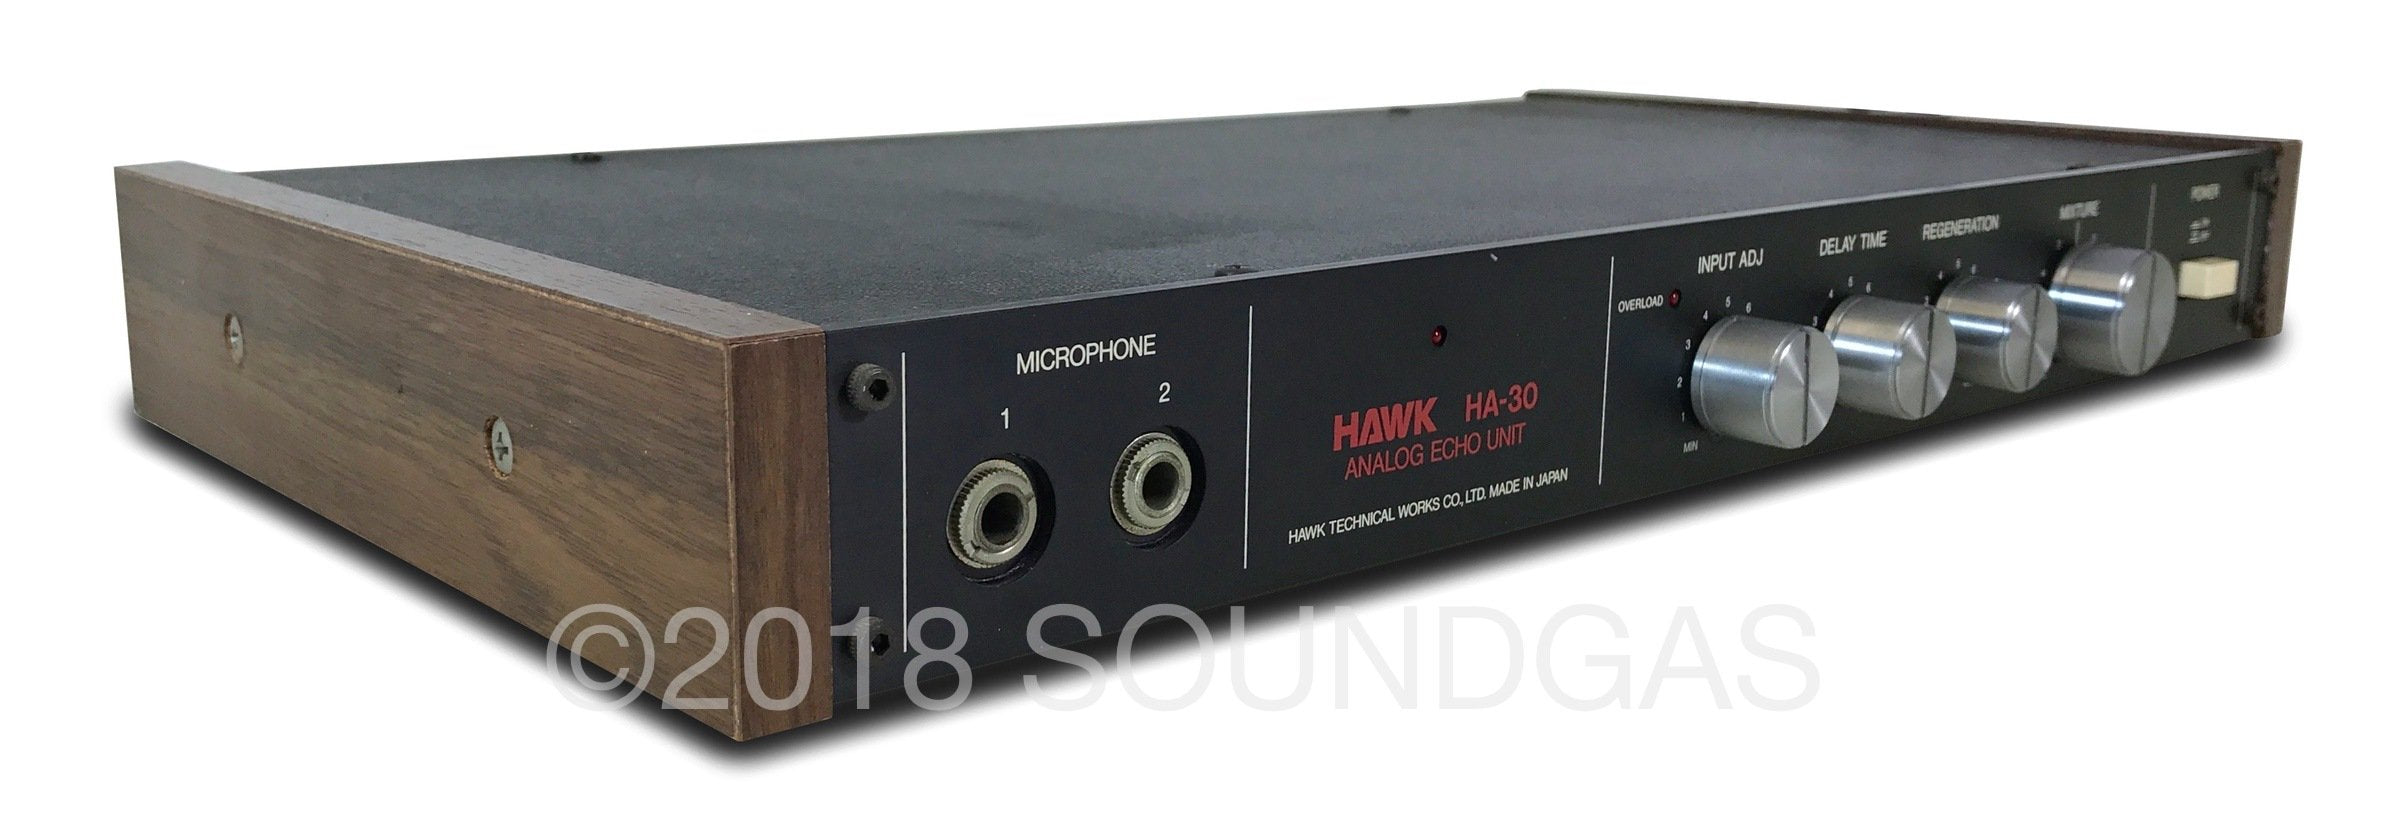 Hawk HA-30 – Soundgas